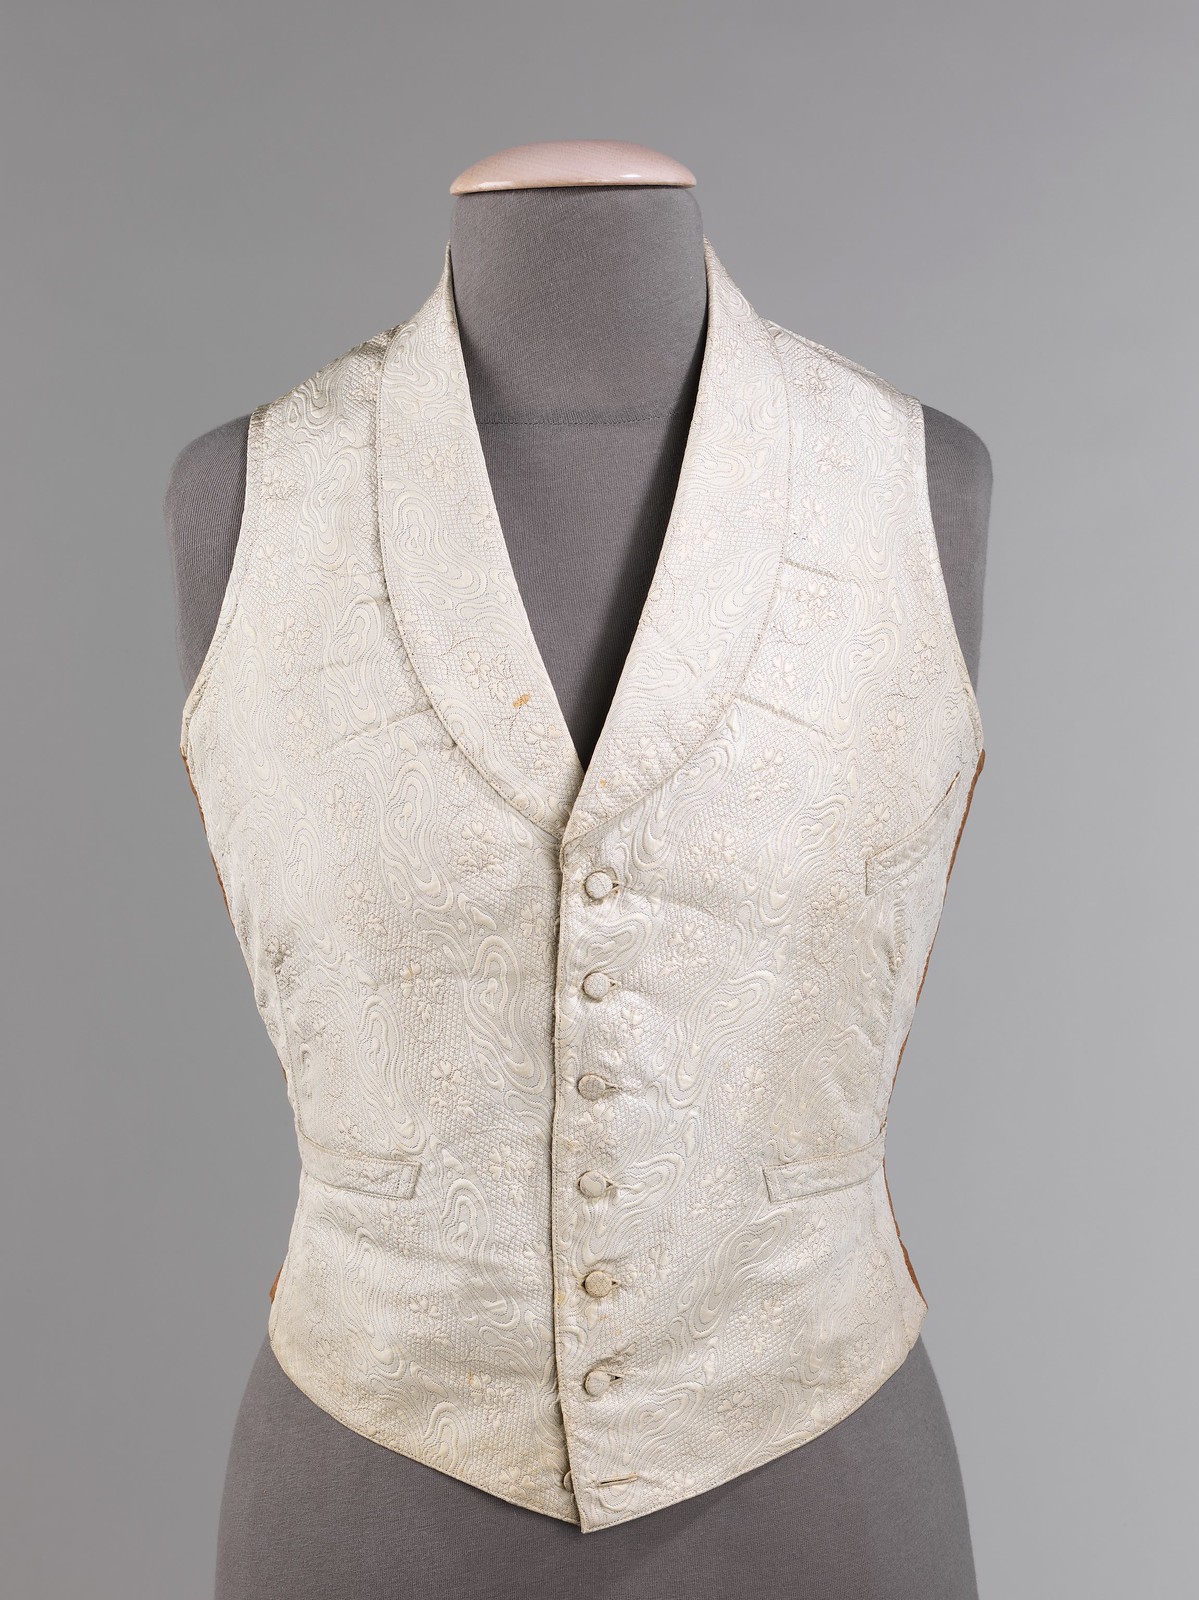 1850. American. Silk, cotton. metmuseum